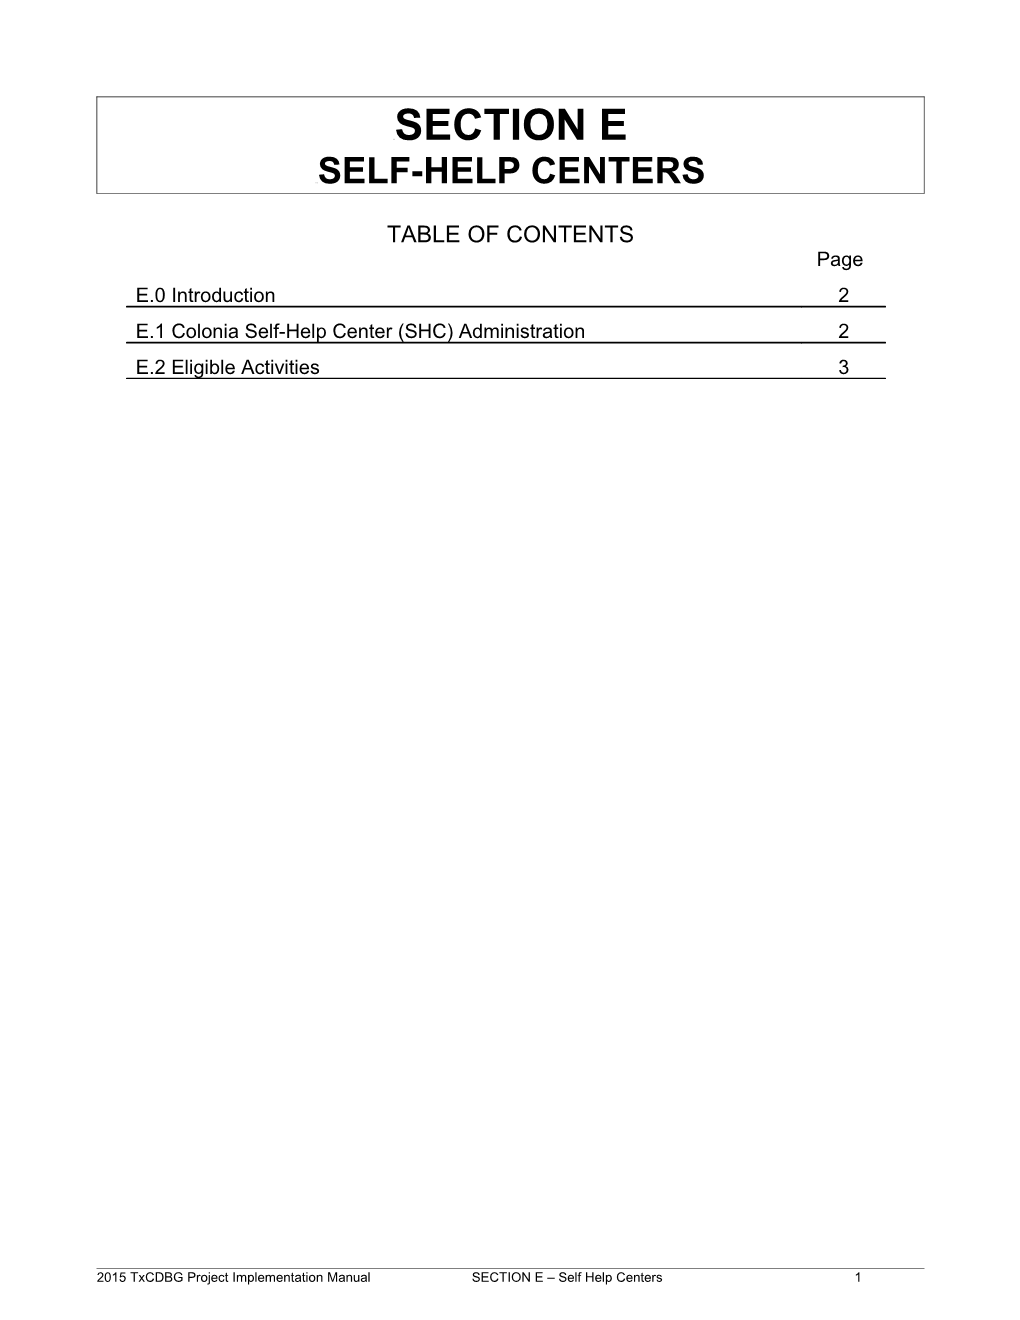 1Bself-Help Centers